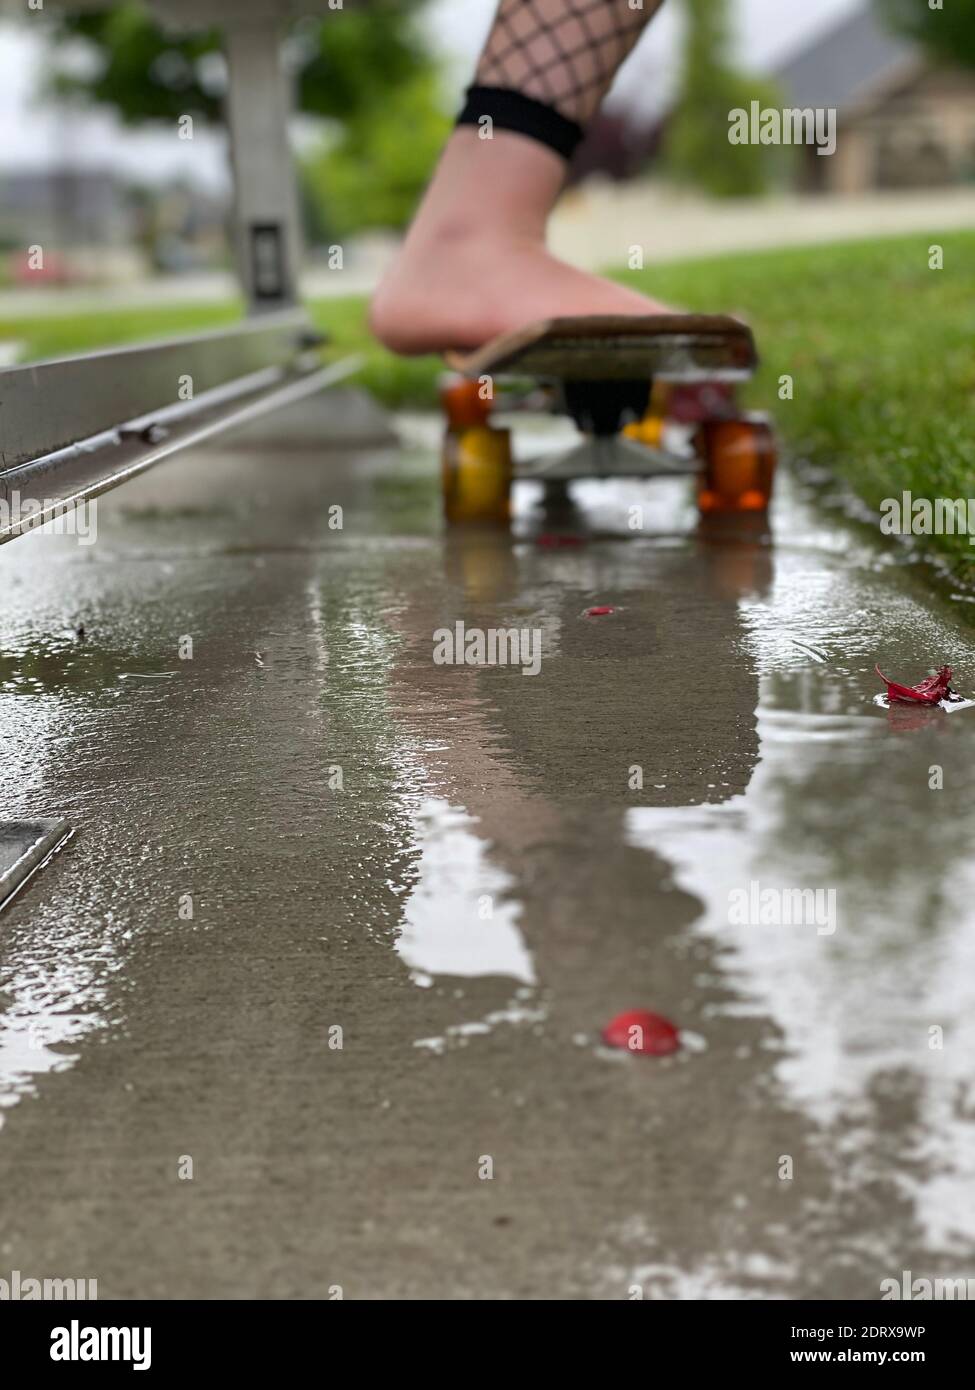 Skater Life, Rainy Day, Feet Resting On Skateboard In The Rain, Reflection  On Wet Ground Stock Photo - Alamy